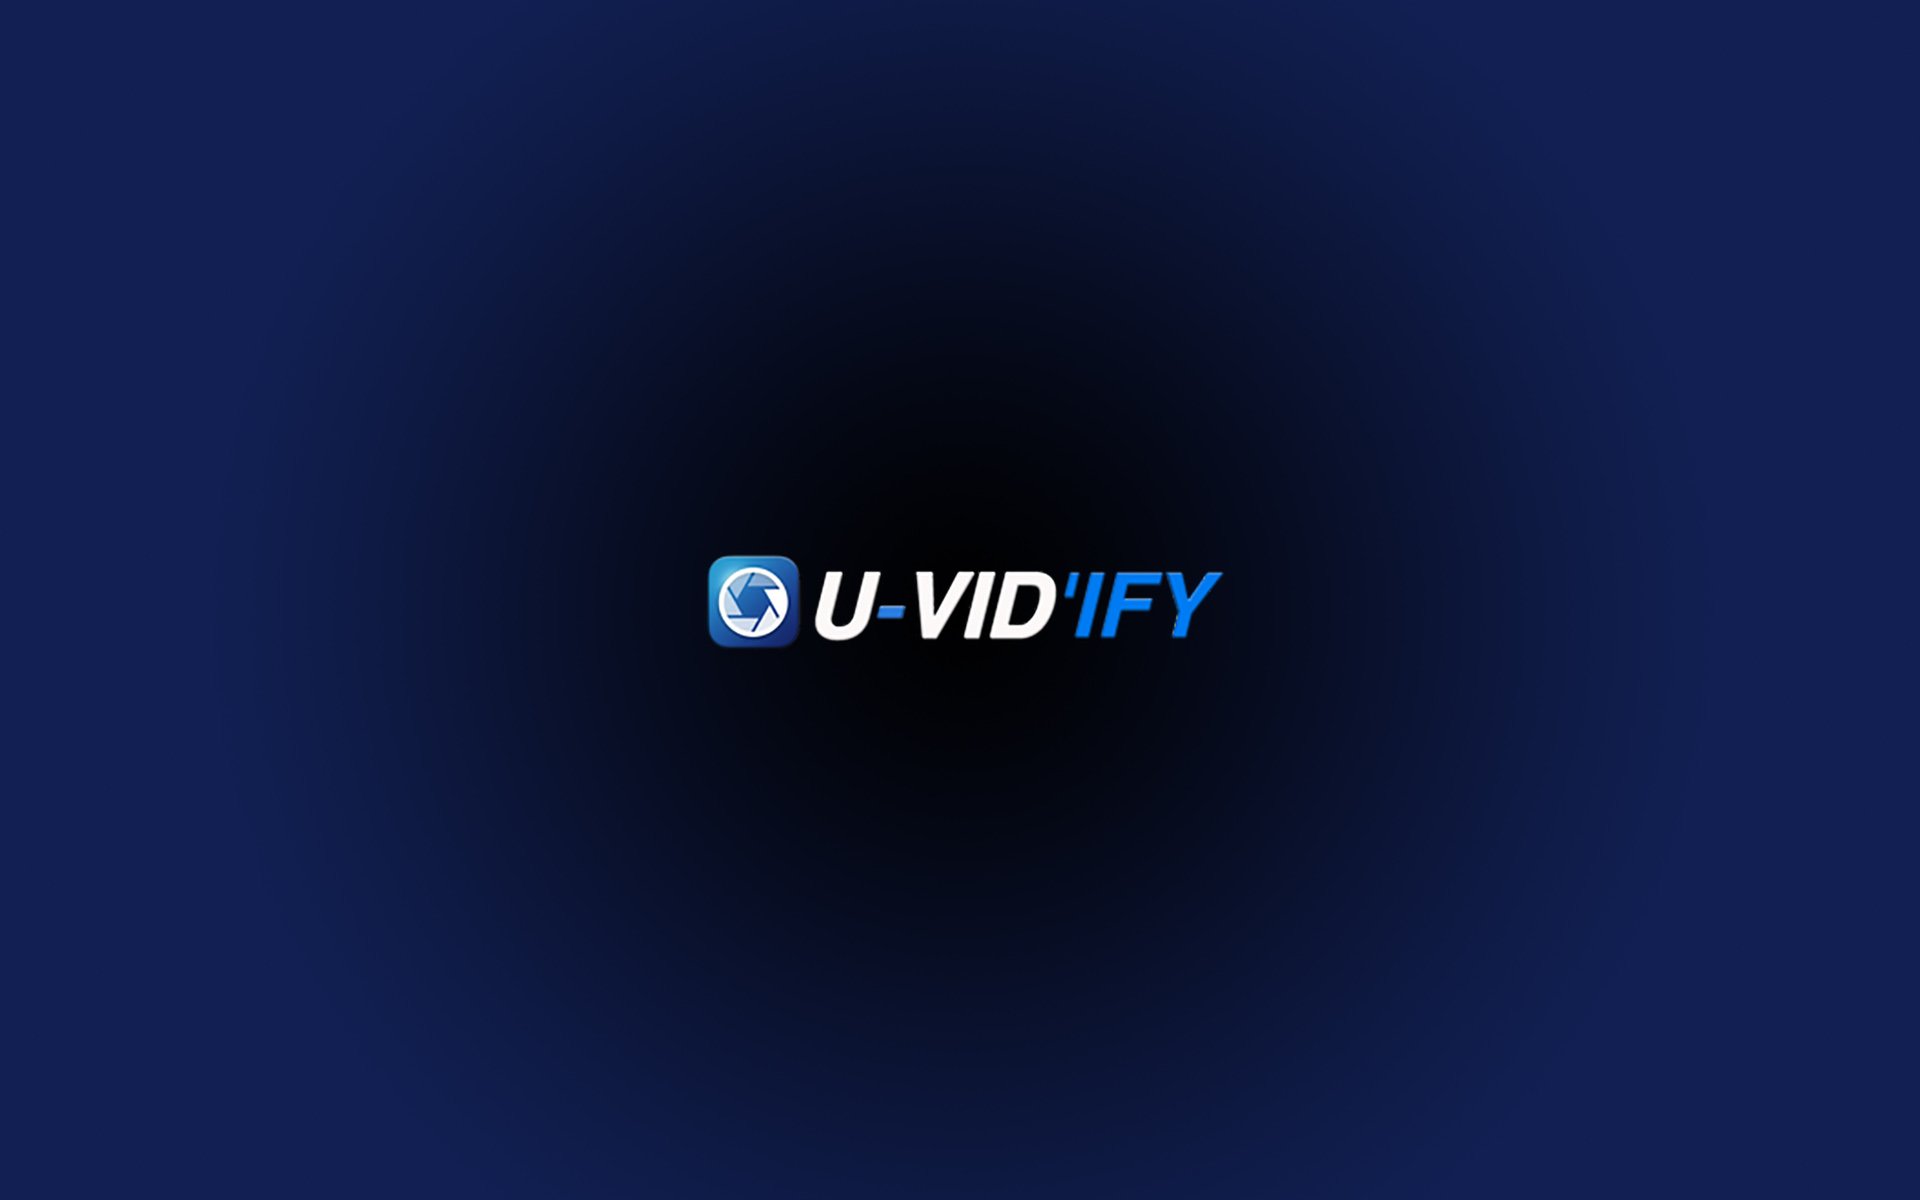 U-VID’IFY Ltd. ICO Token Sale-Pre-Registration The First Video-Based Classified World Market, Goes Live 5/7/2018 12:00 UTC